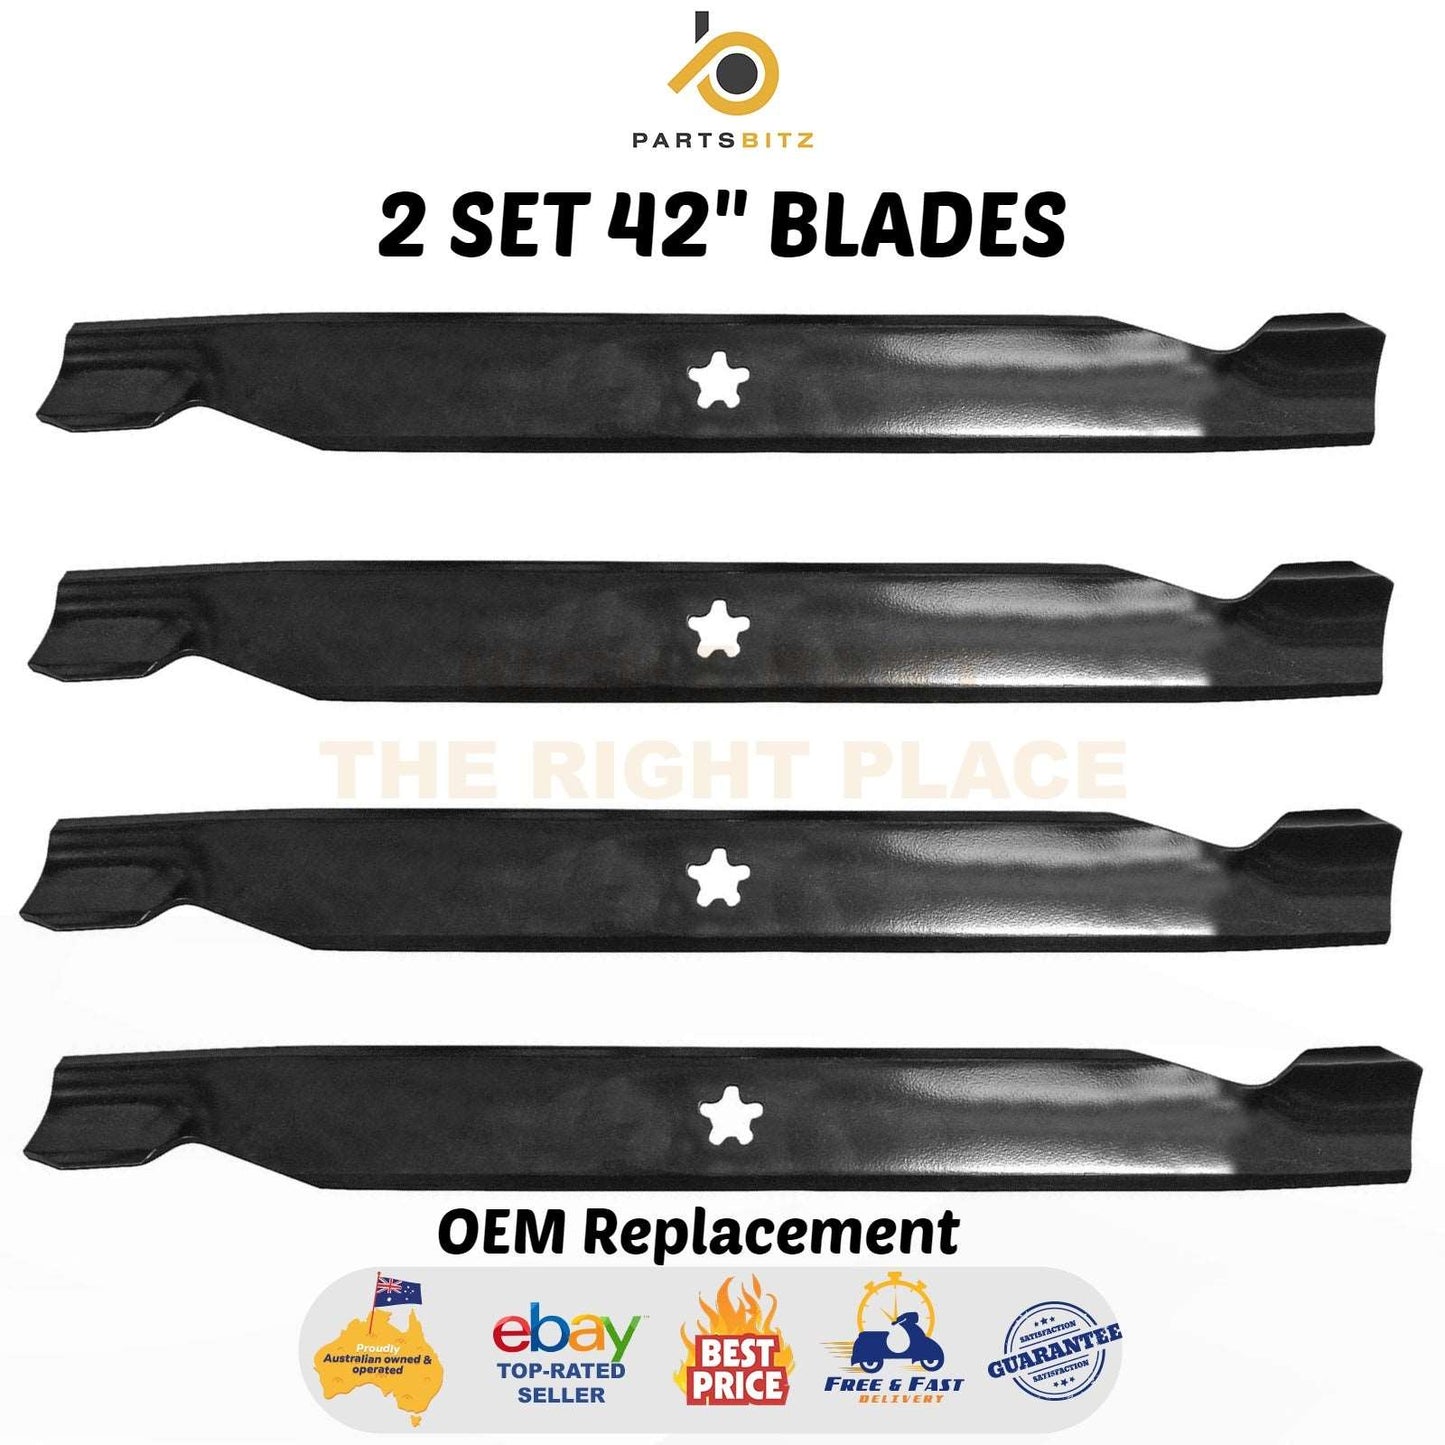 4 X 42" Blades for Husqvarna Craftsman Ride on Mowers Lt125 Lt140 Lth1842